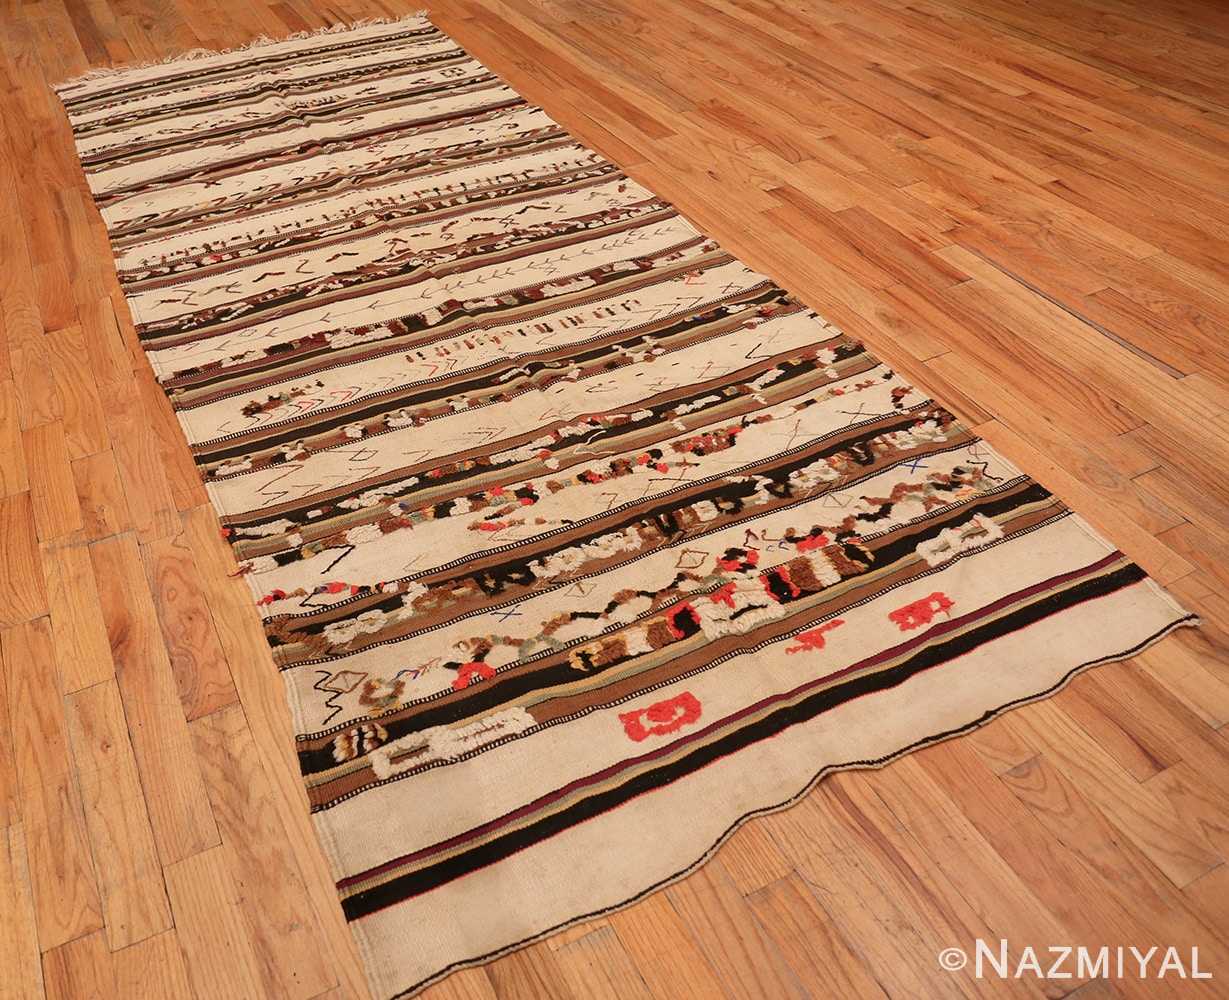 Full Moroccan rug 46471 by Nazmiyal